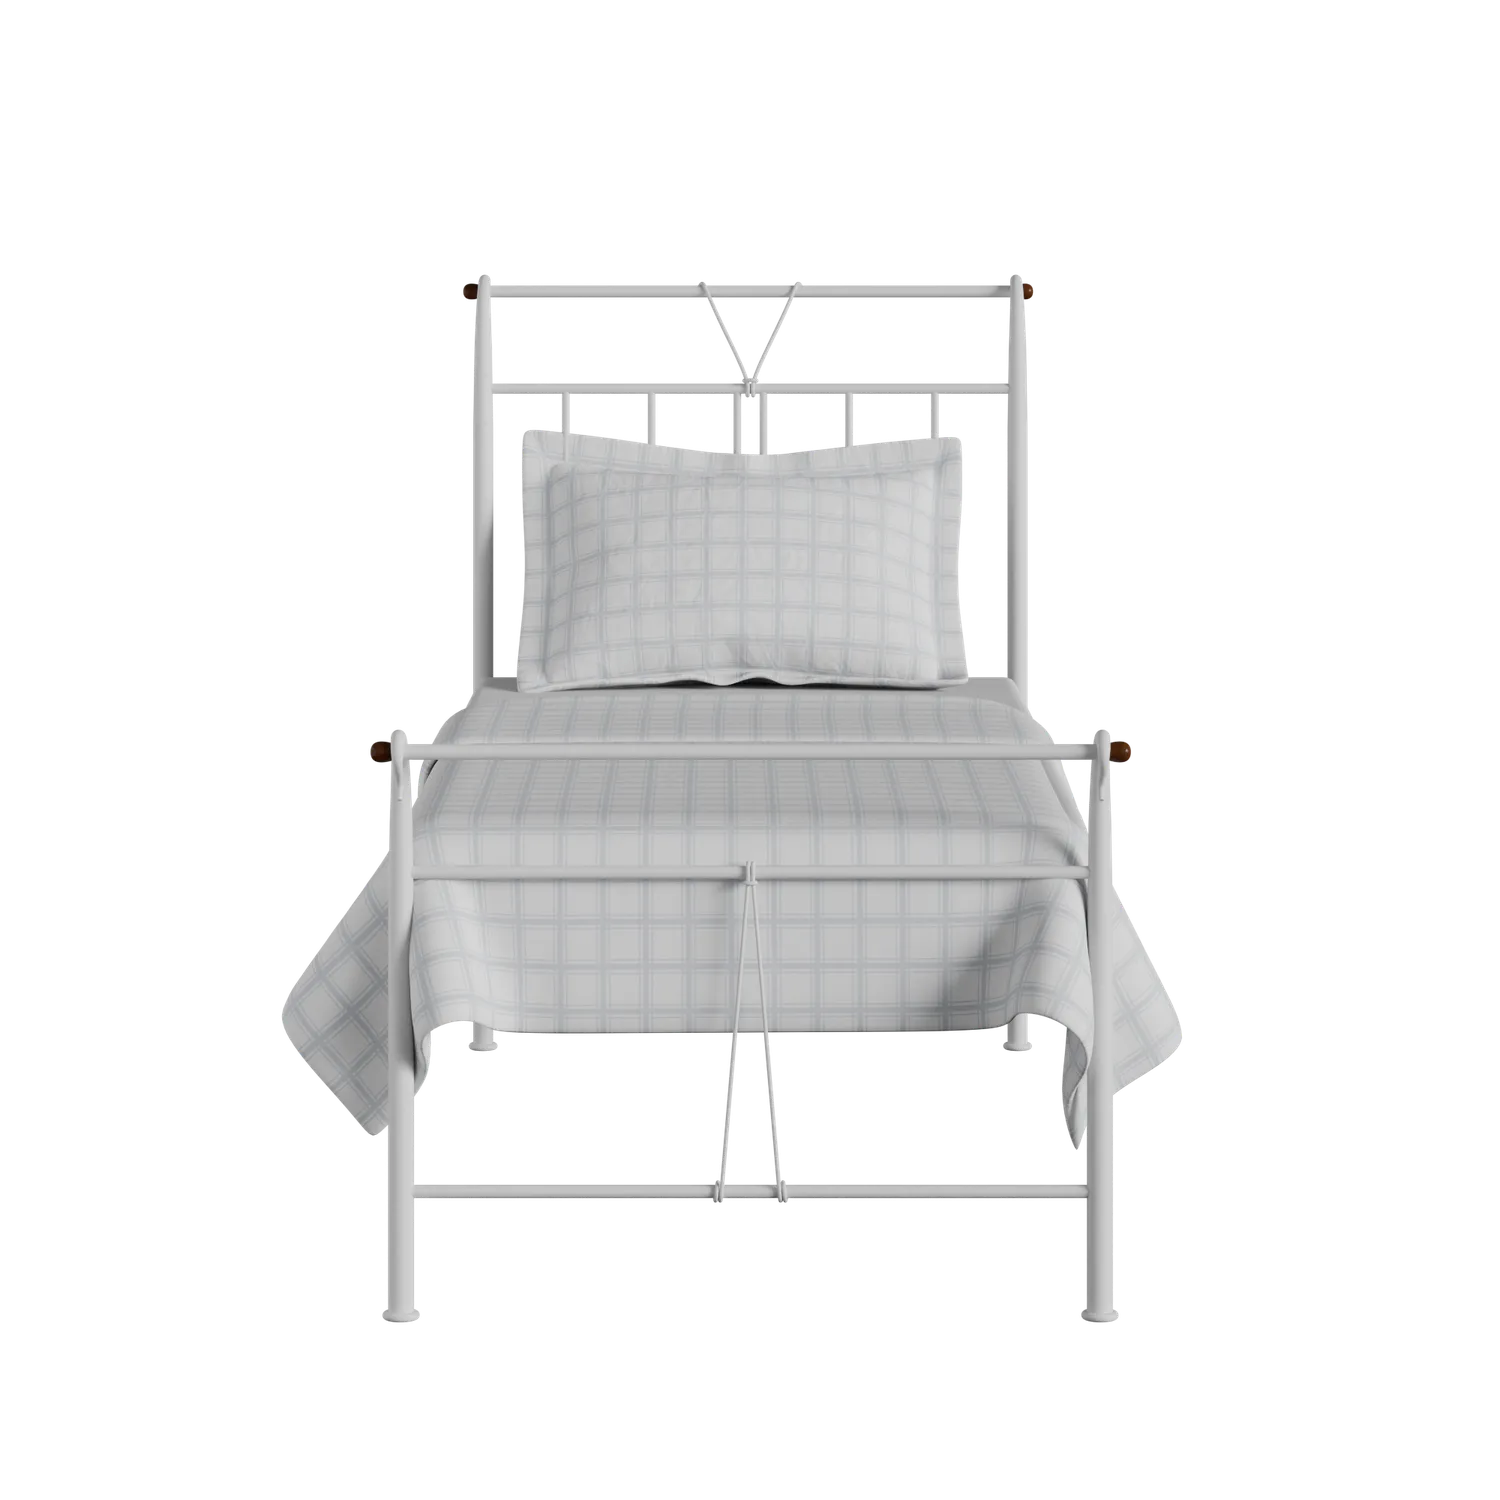 Pellini iron/metal single bed in white